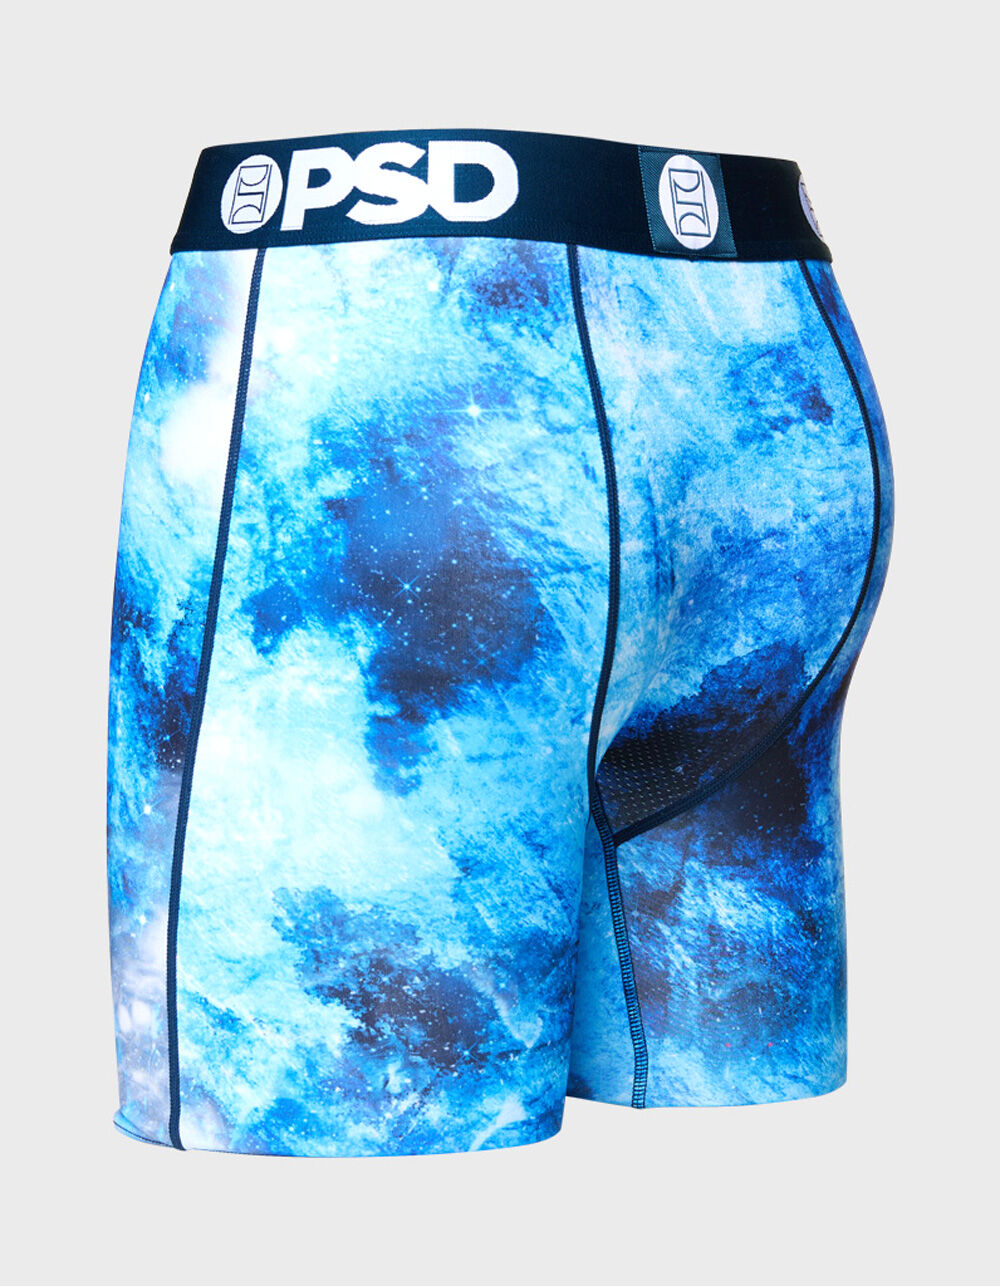 PSD Men's Ombre Luxe Boxer Briefs, Blue, S, Blue, Small 